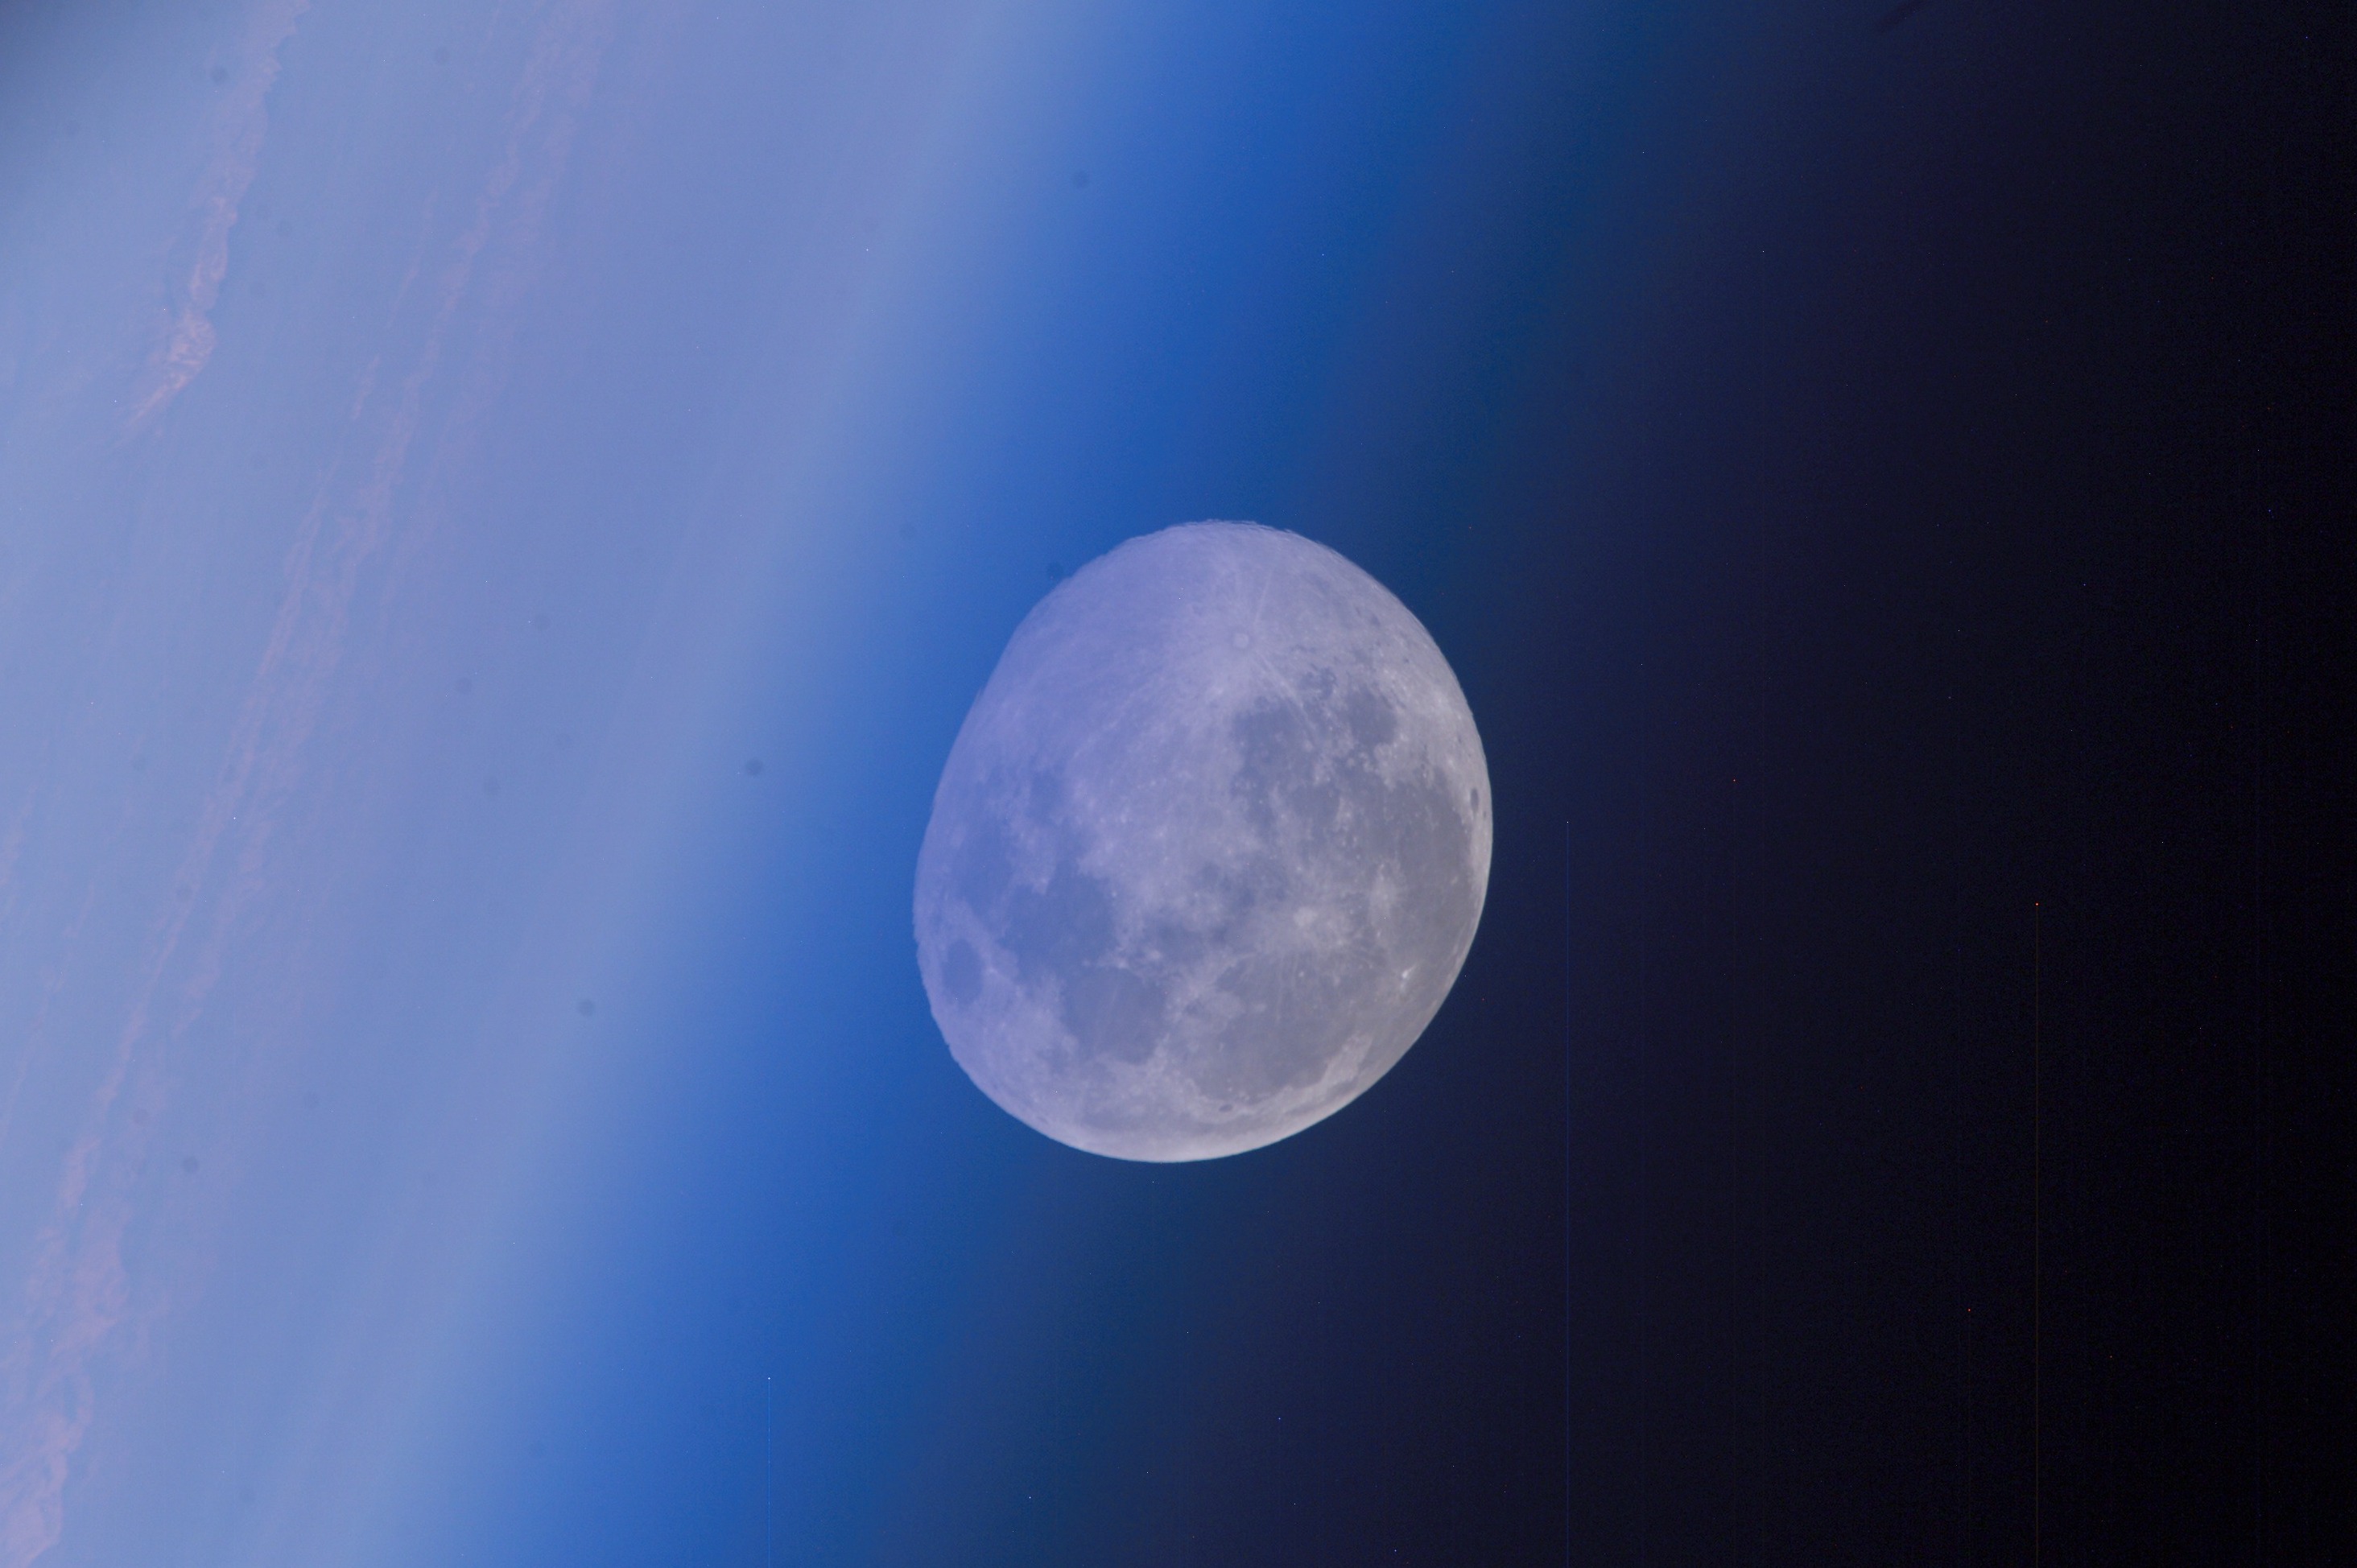 moon at horizon seen through blue hazy atmosphere 